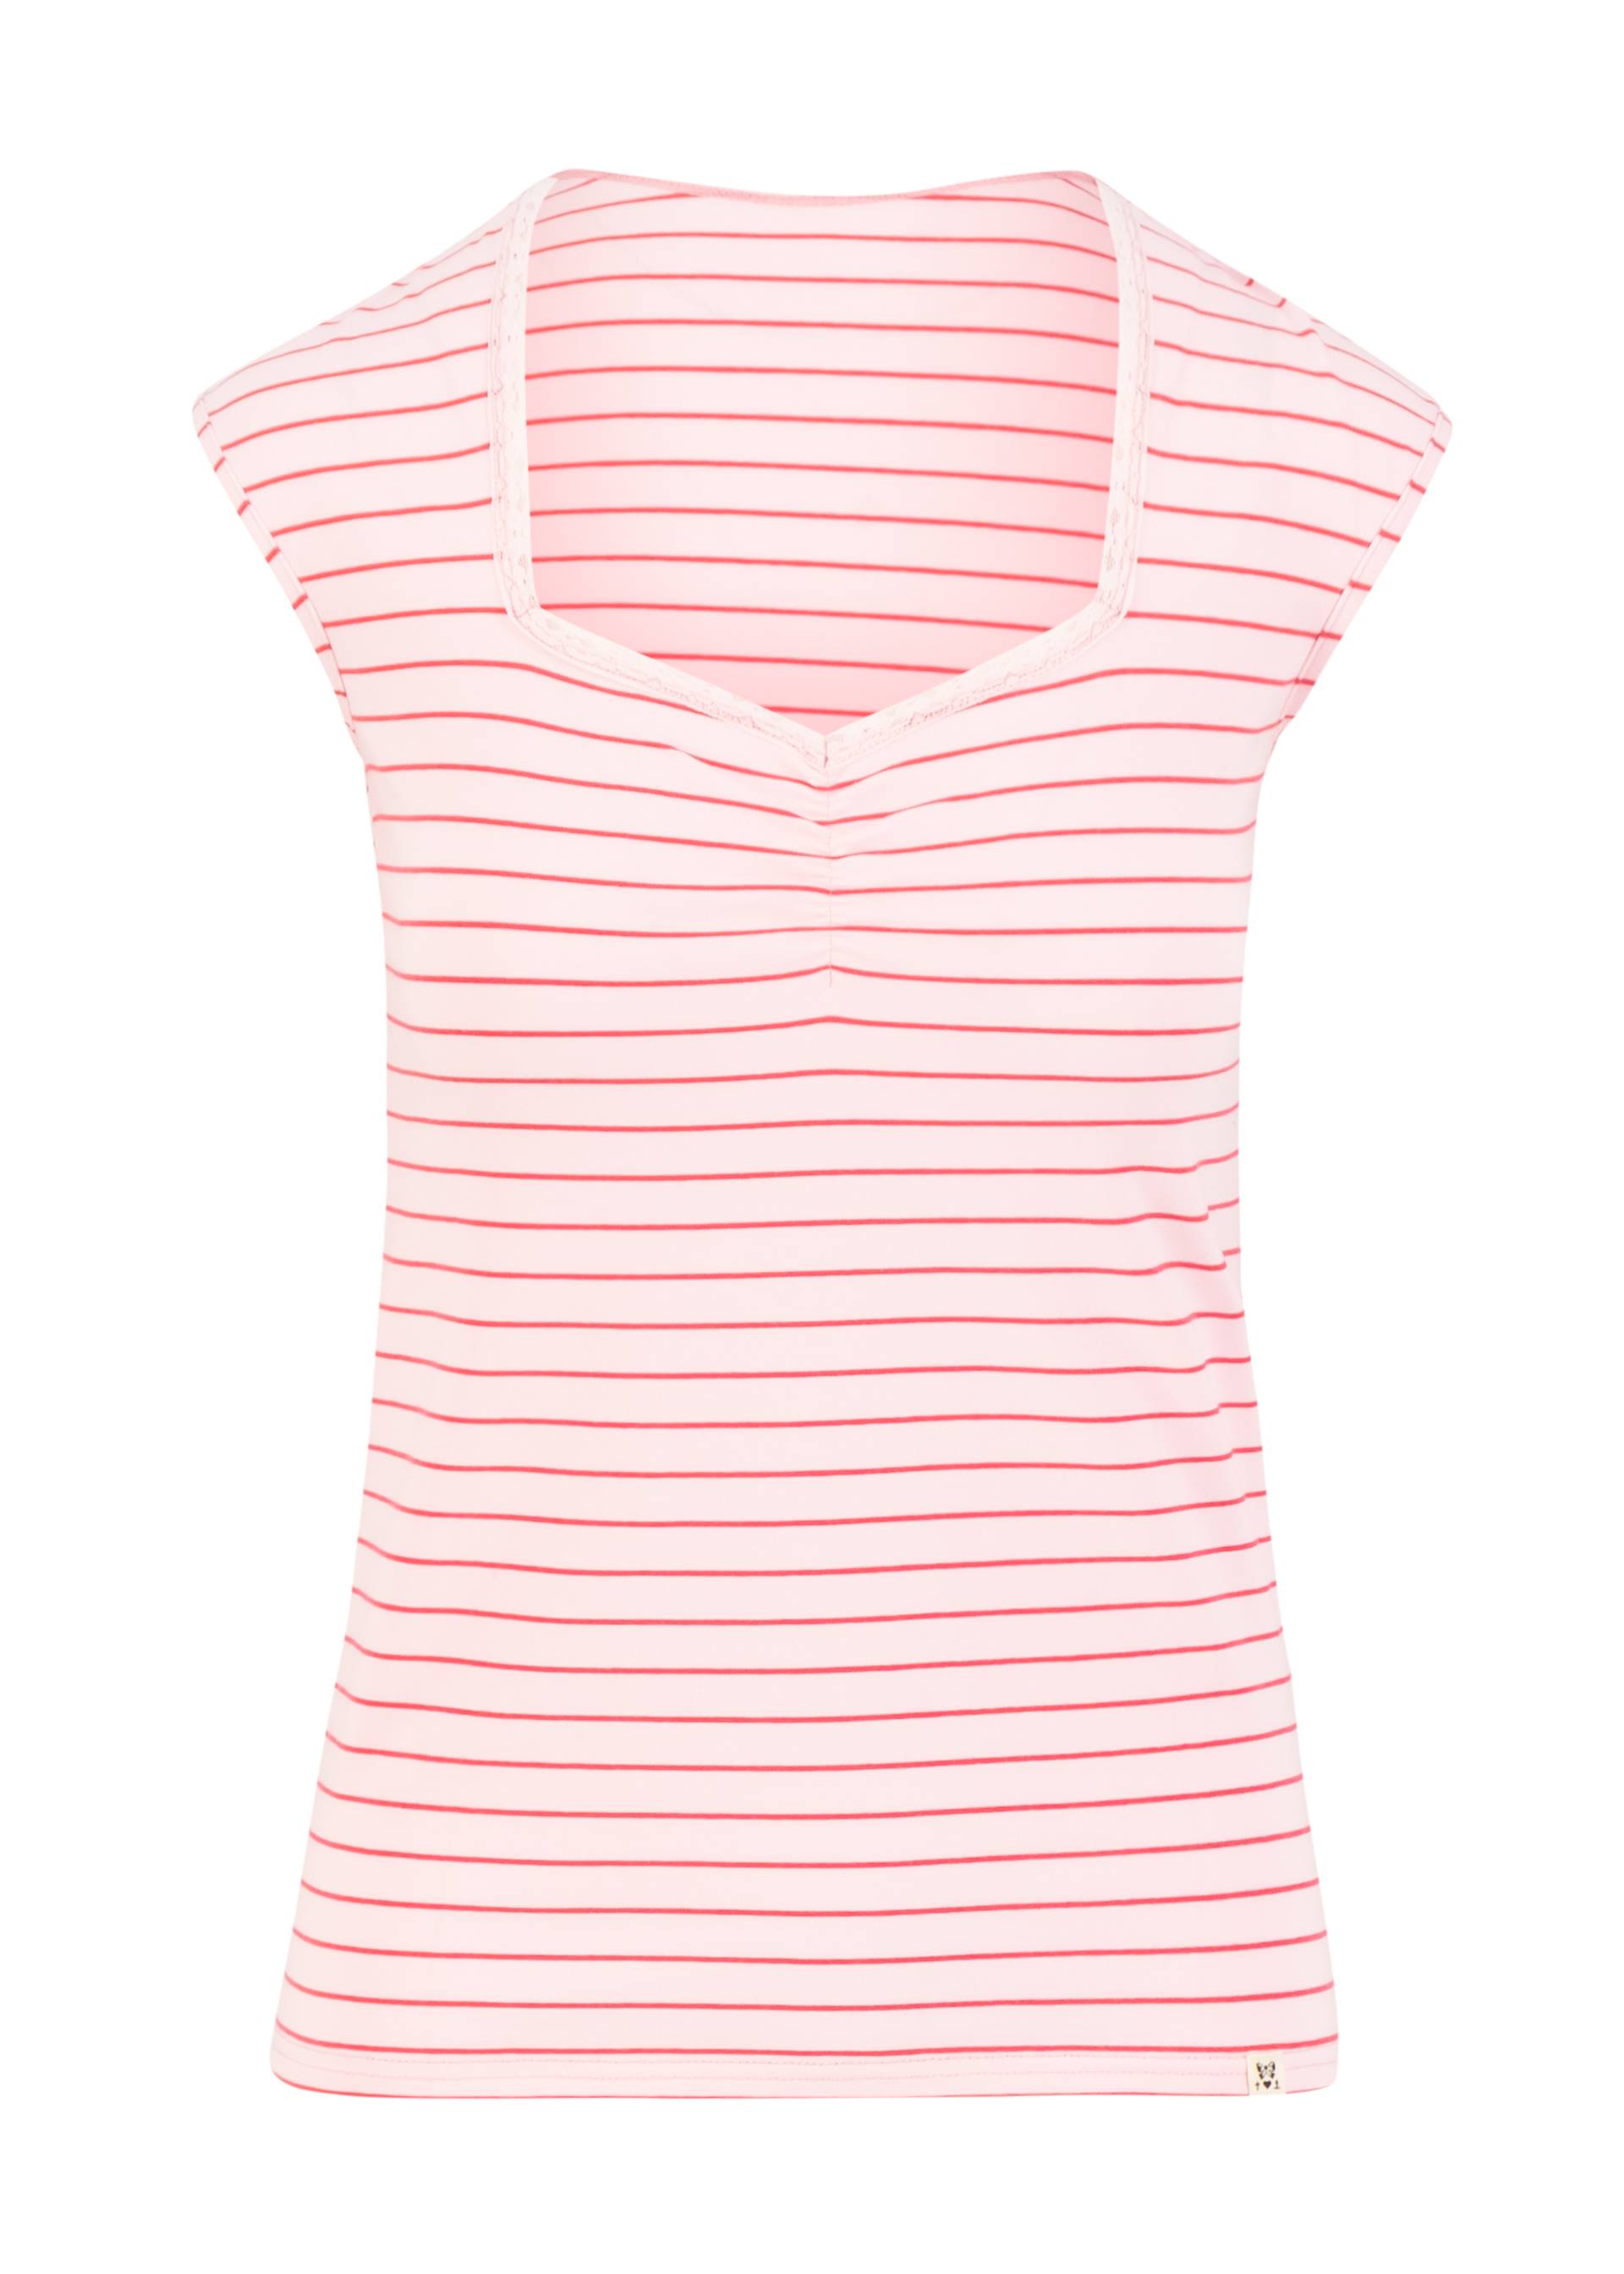 Breton shirt Let Romance  Rule, strawberry stripes, Tops, Pink